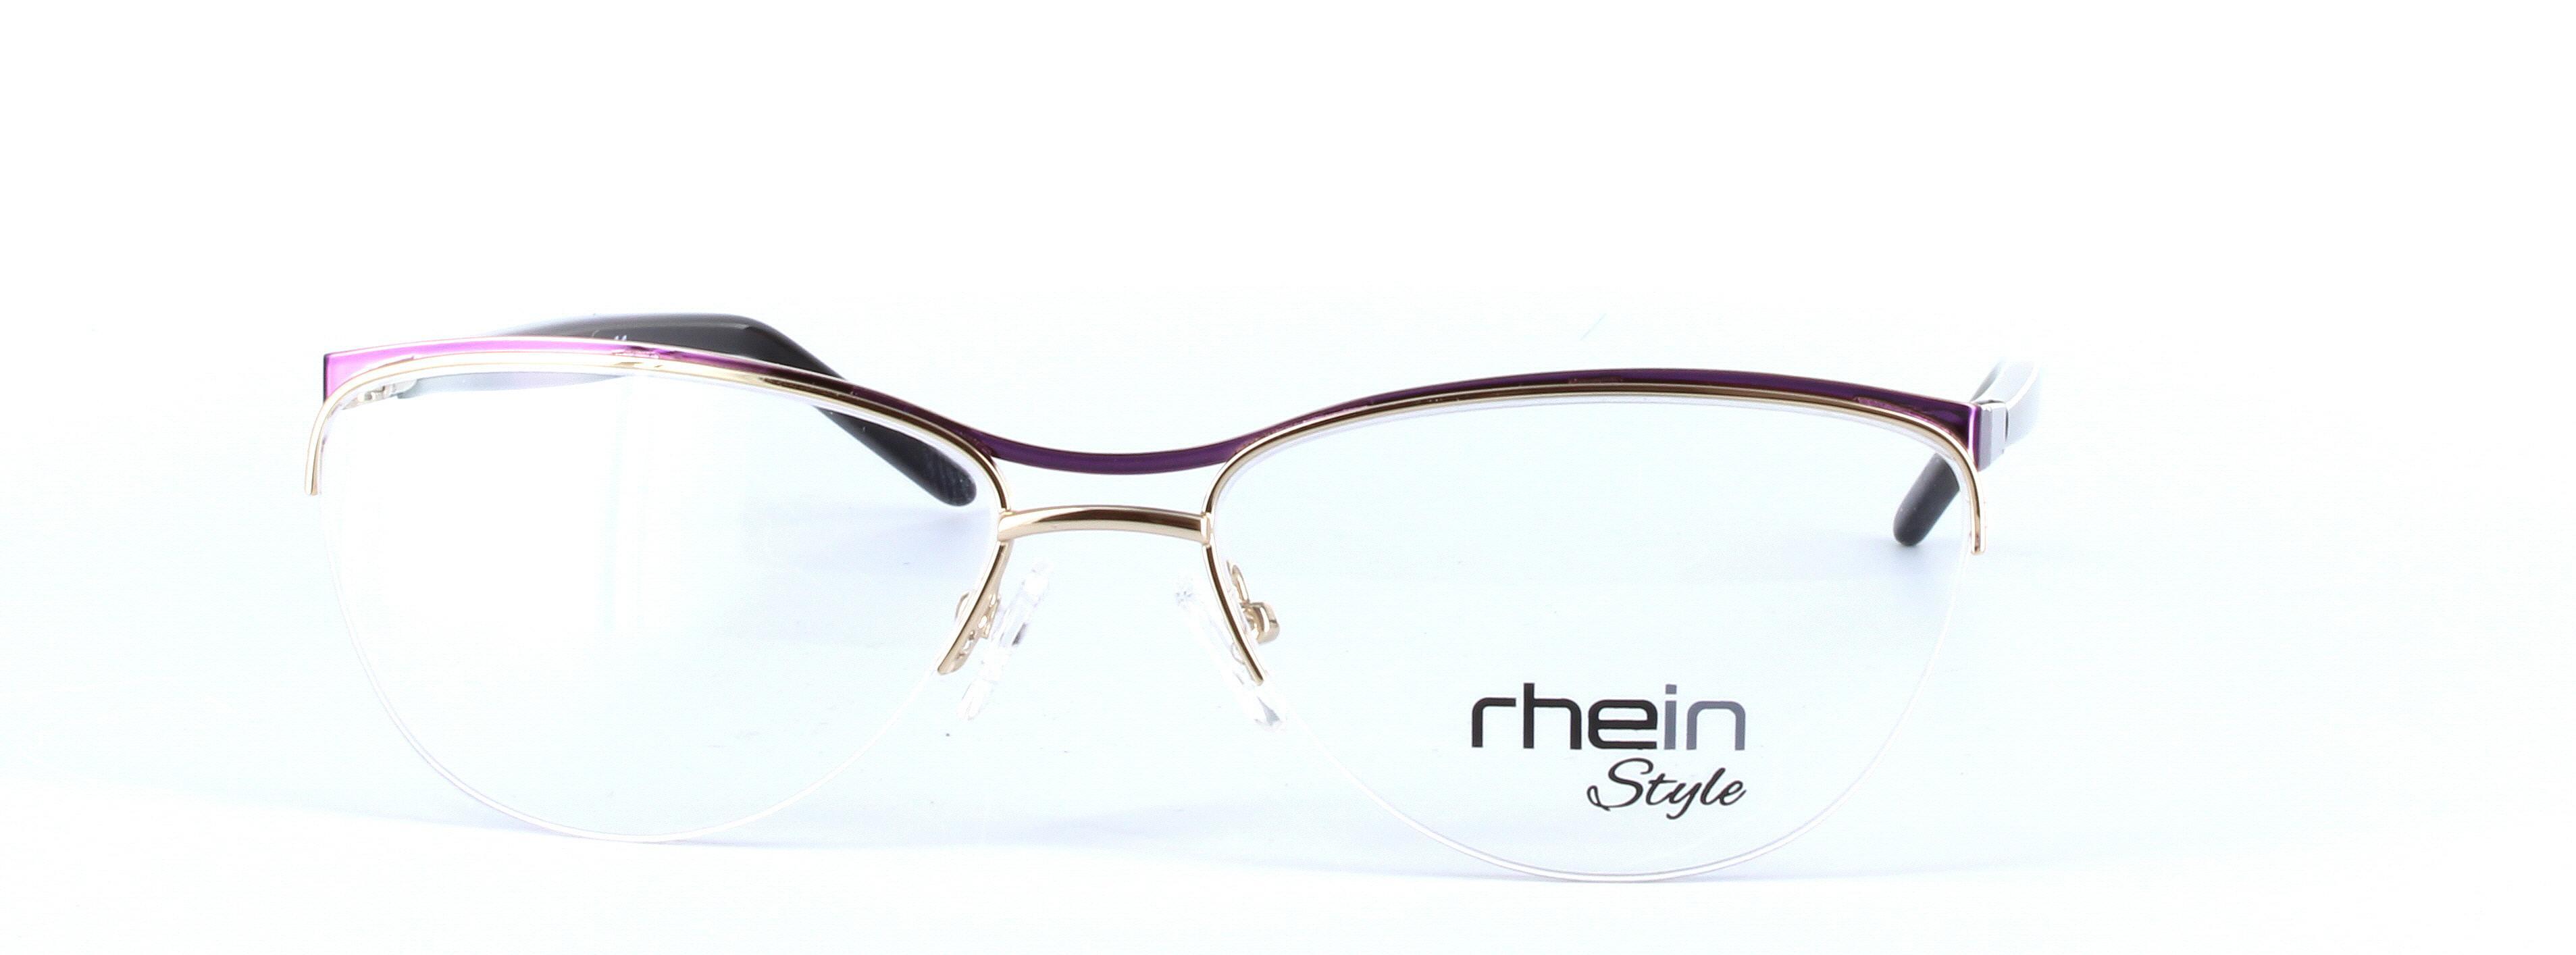 Agora Purple Semi Rimless Oval Metal Glasses - Image View 5